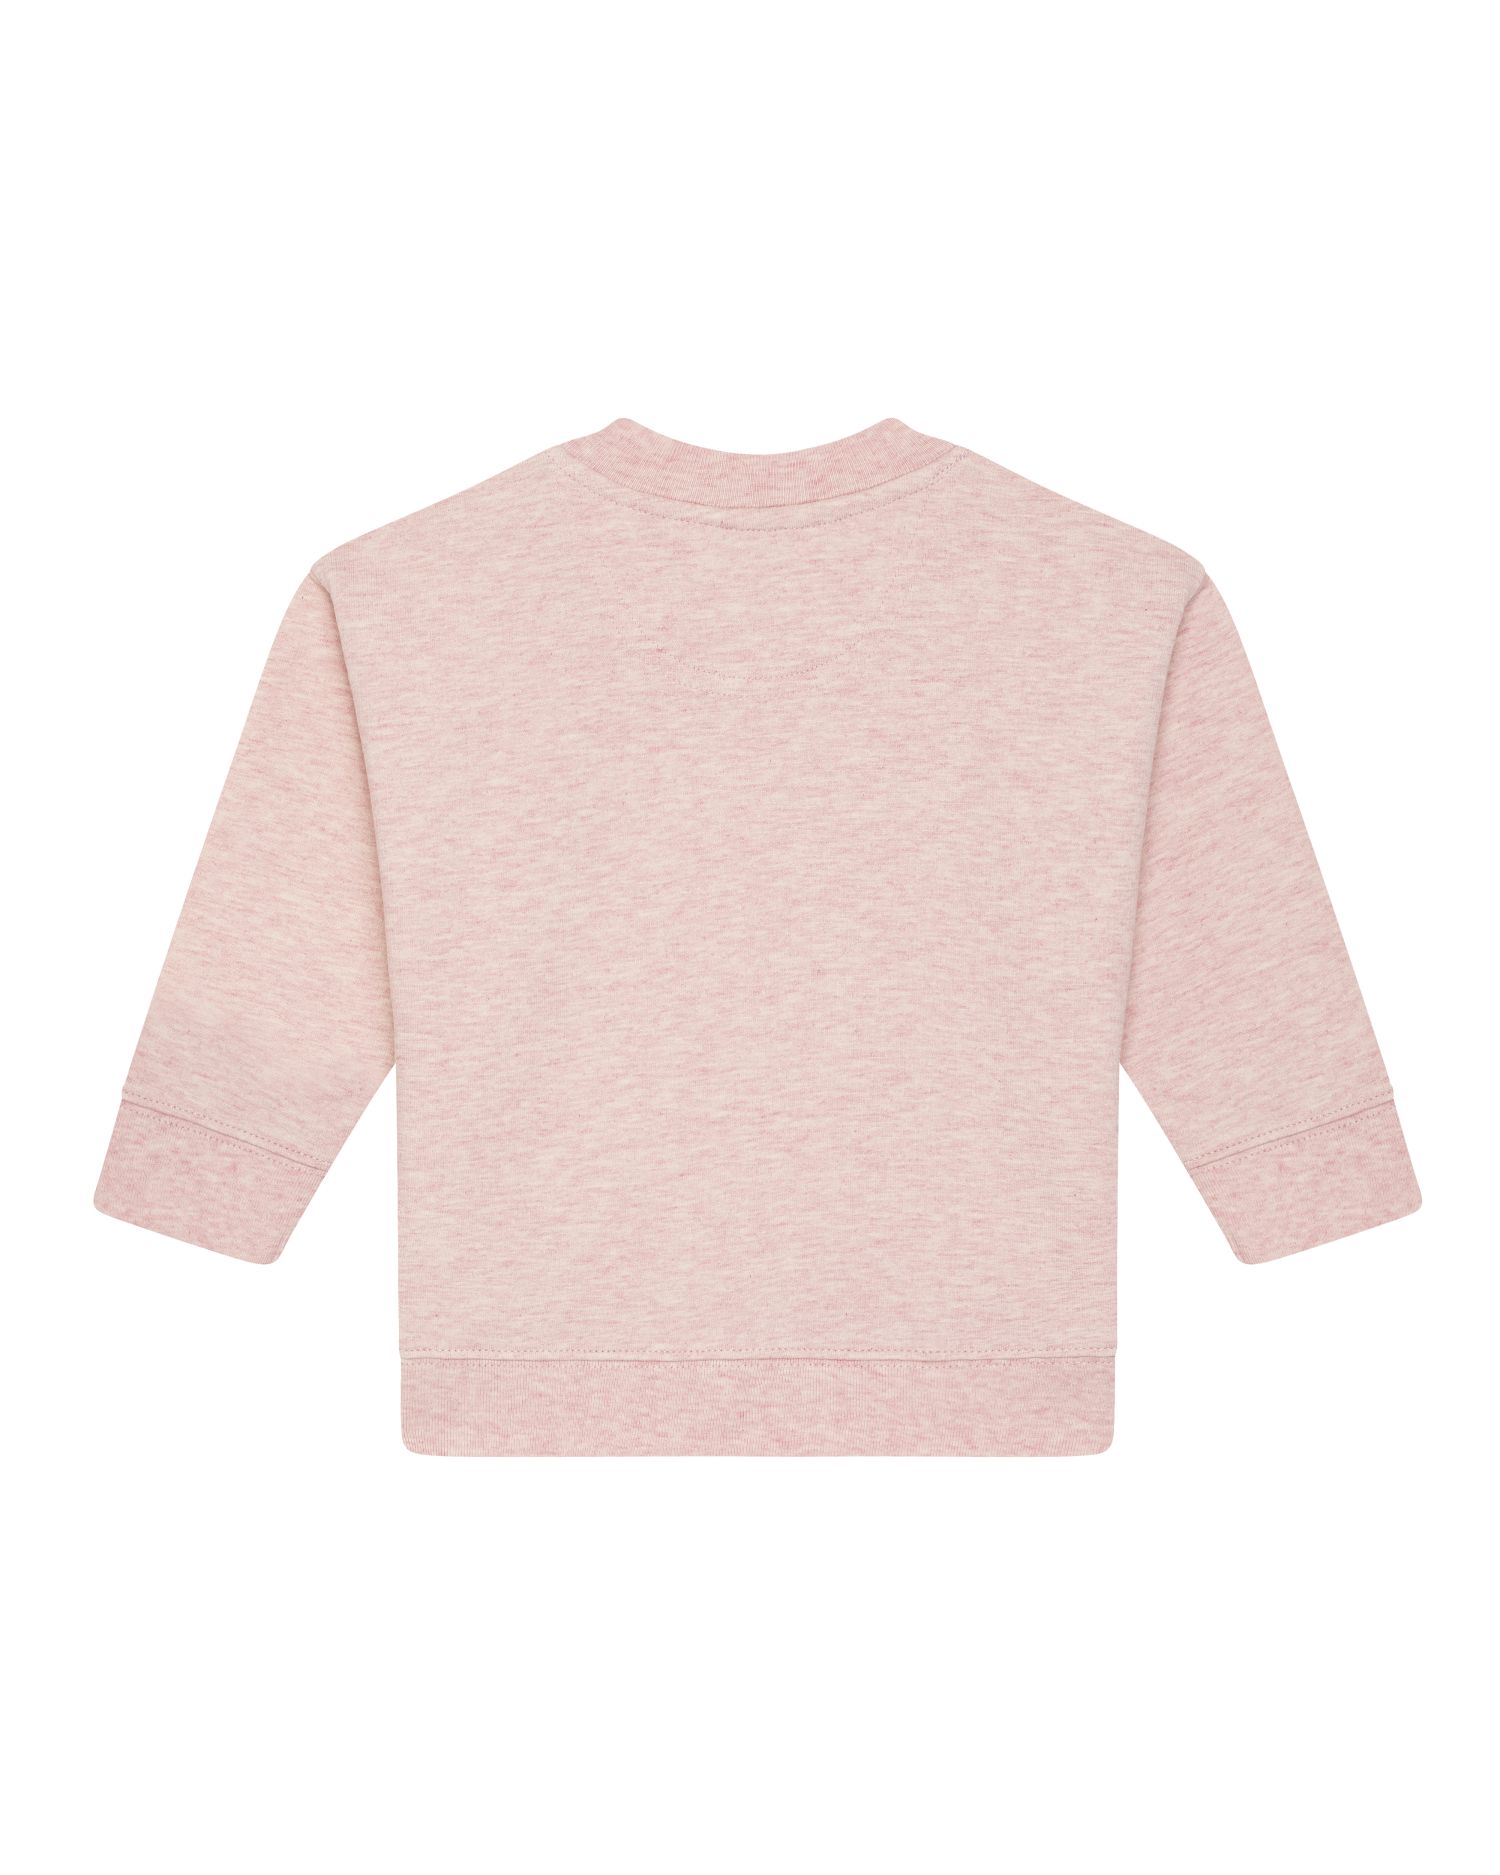 Crew neck sweatshirts Baby Changer in Farbe Cream Heather Pink